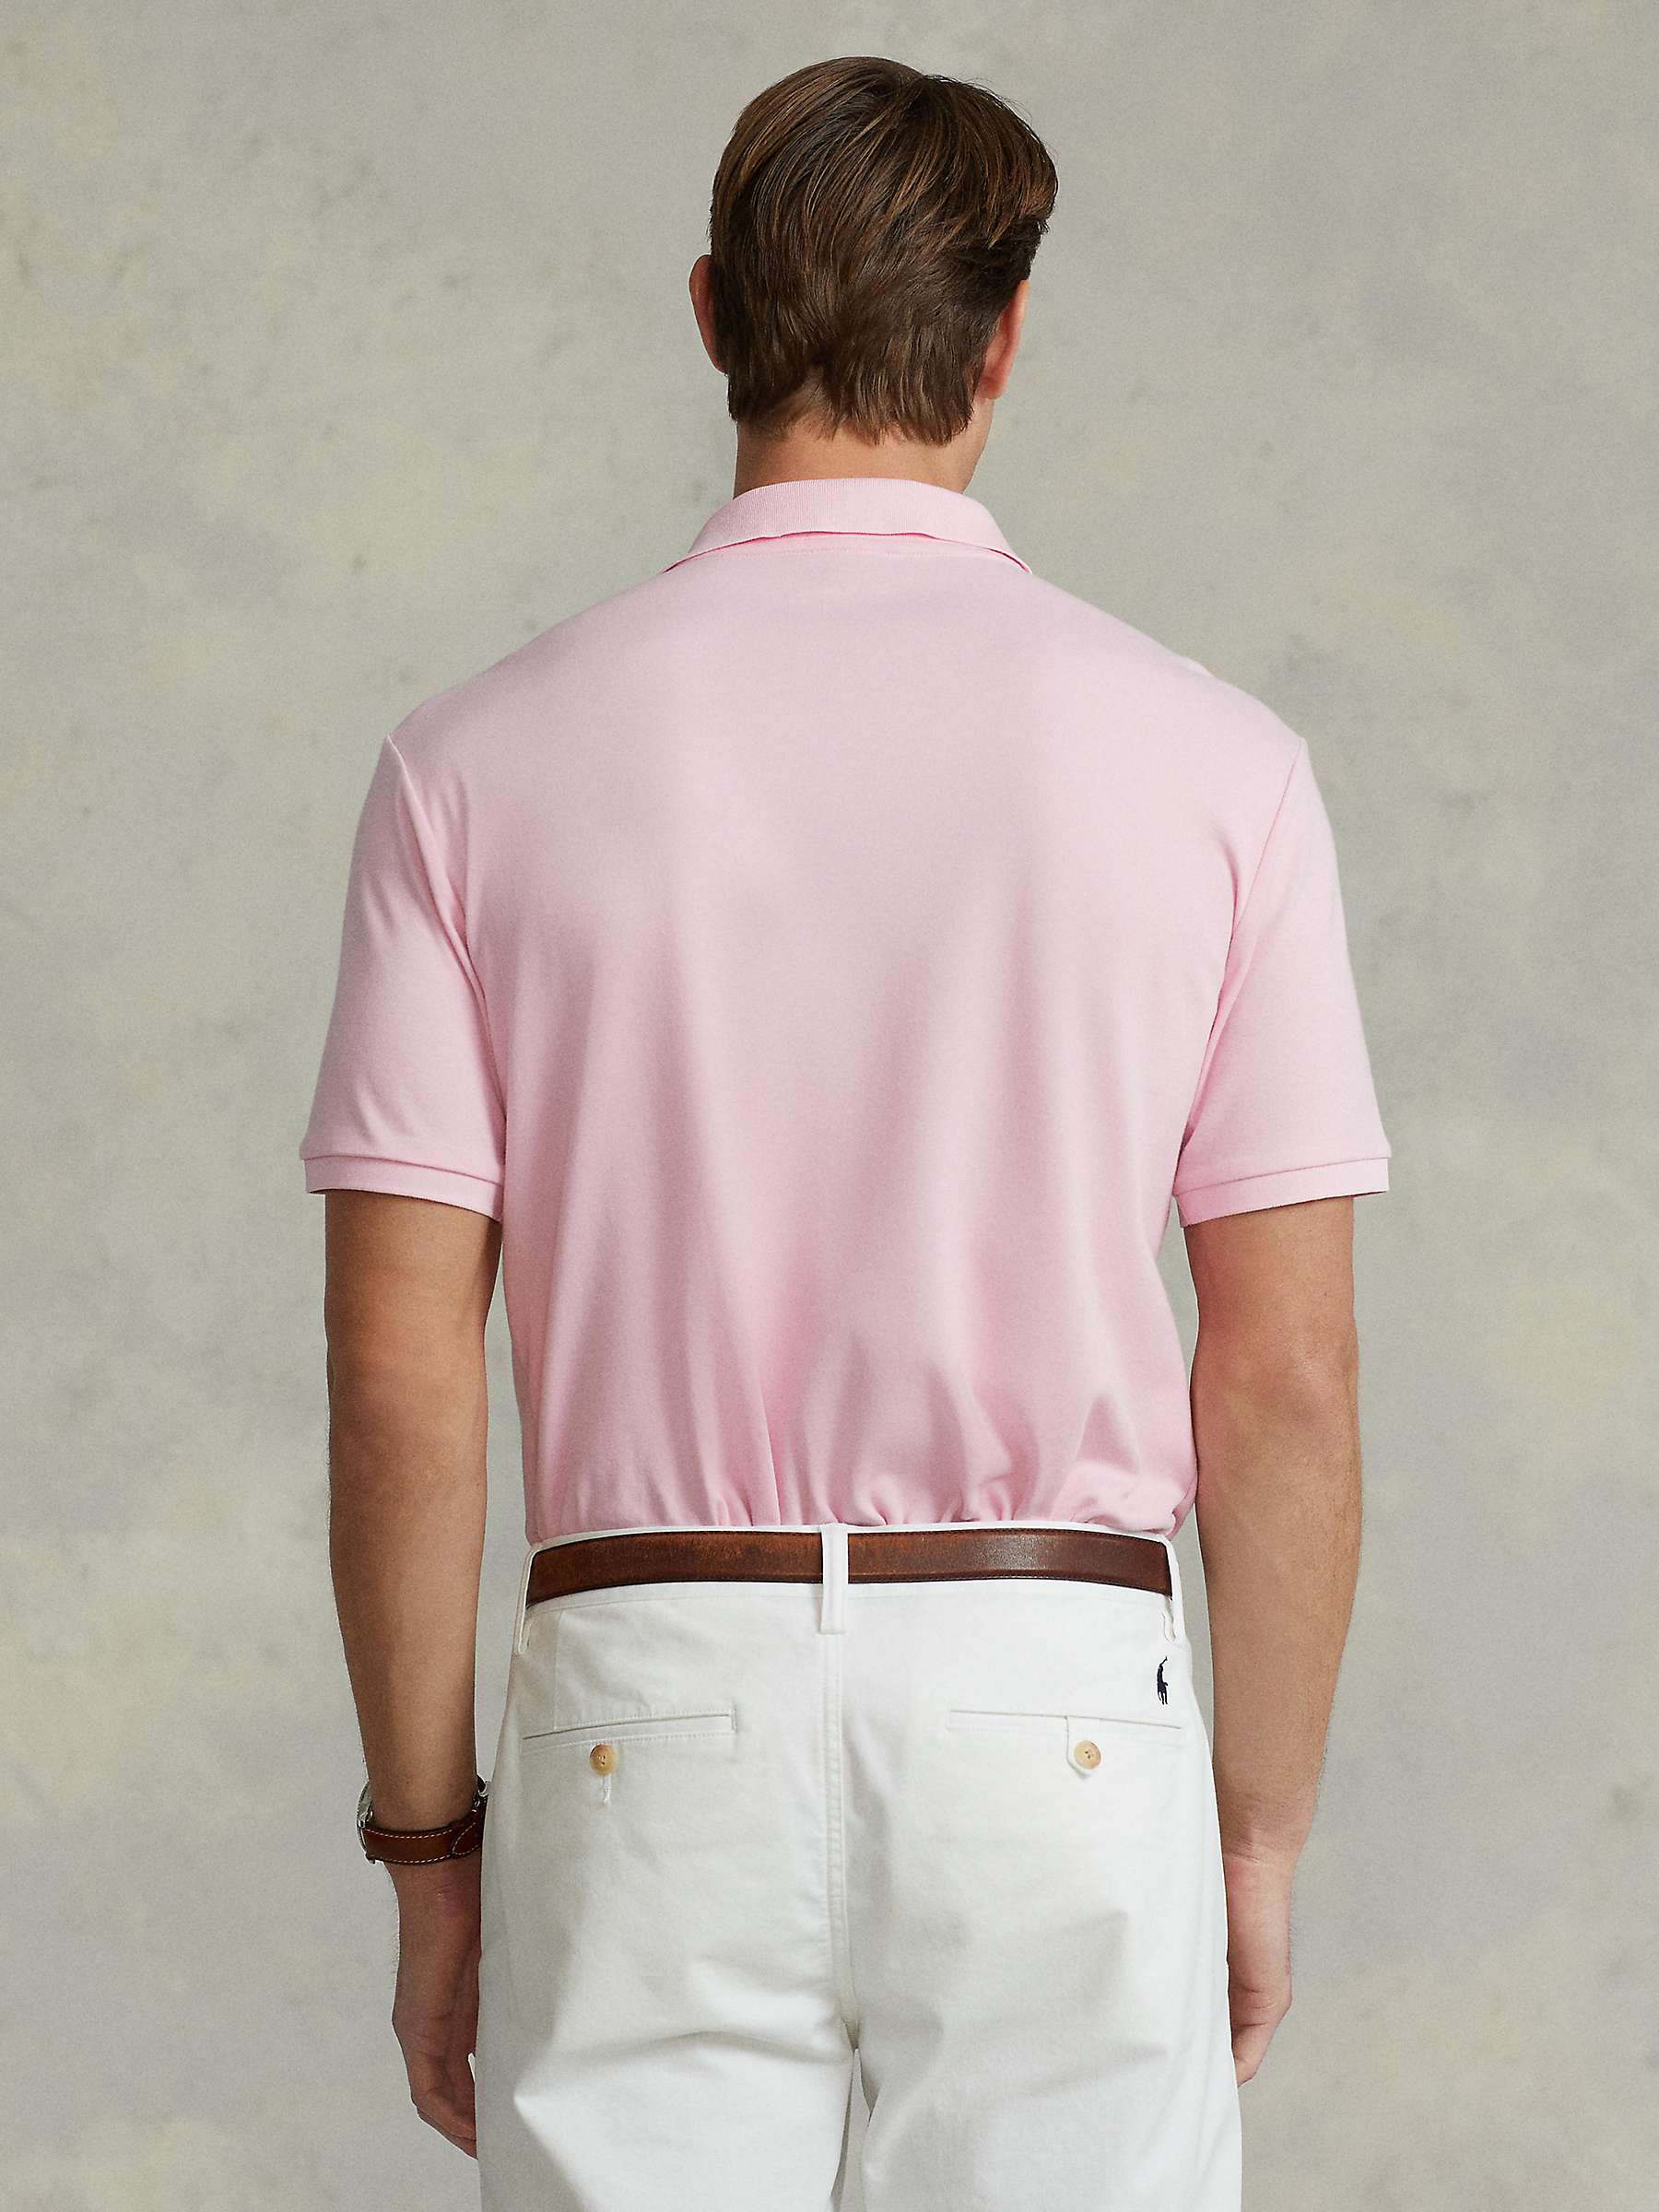 Buy Polo Ralph Lauren Custom Slim Fit Soft Cotton Polo Shirt Online at johnlewis.com